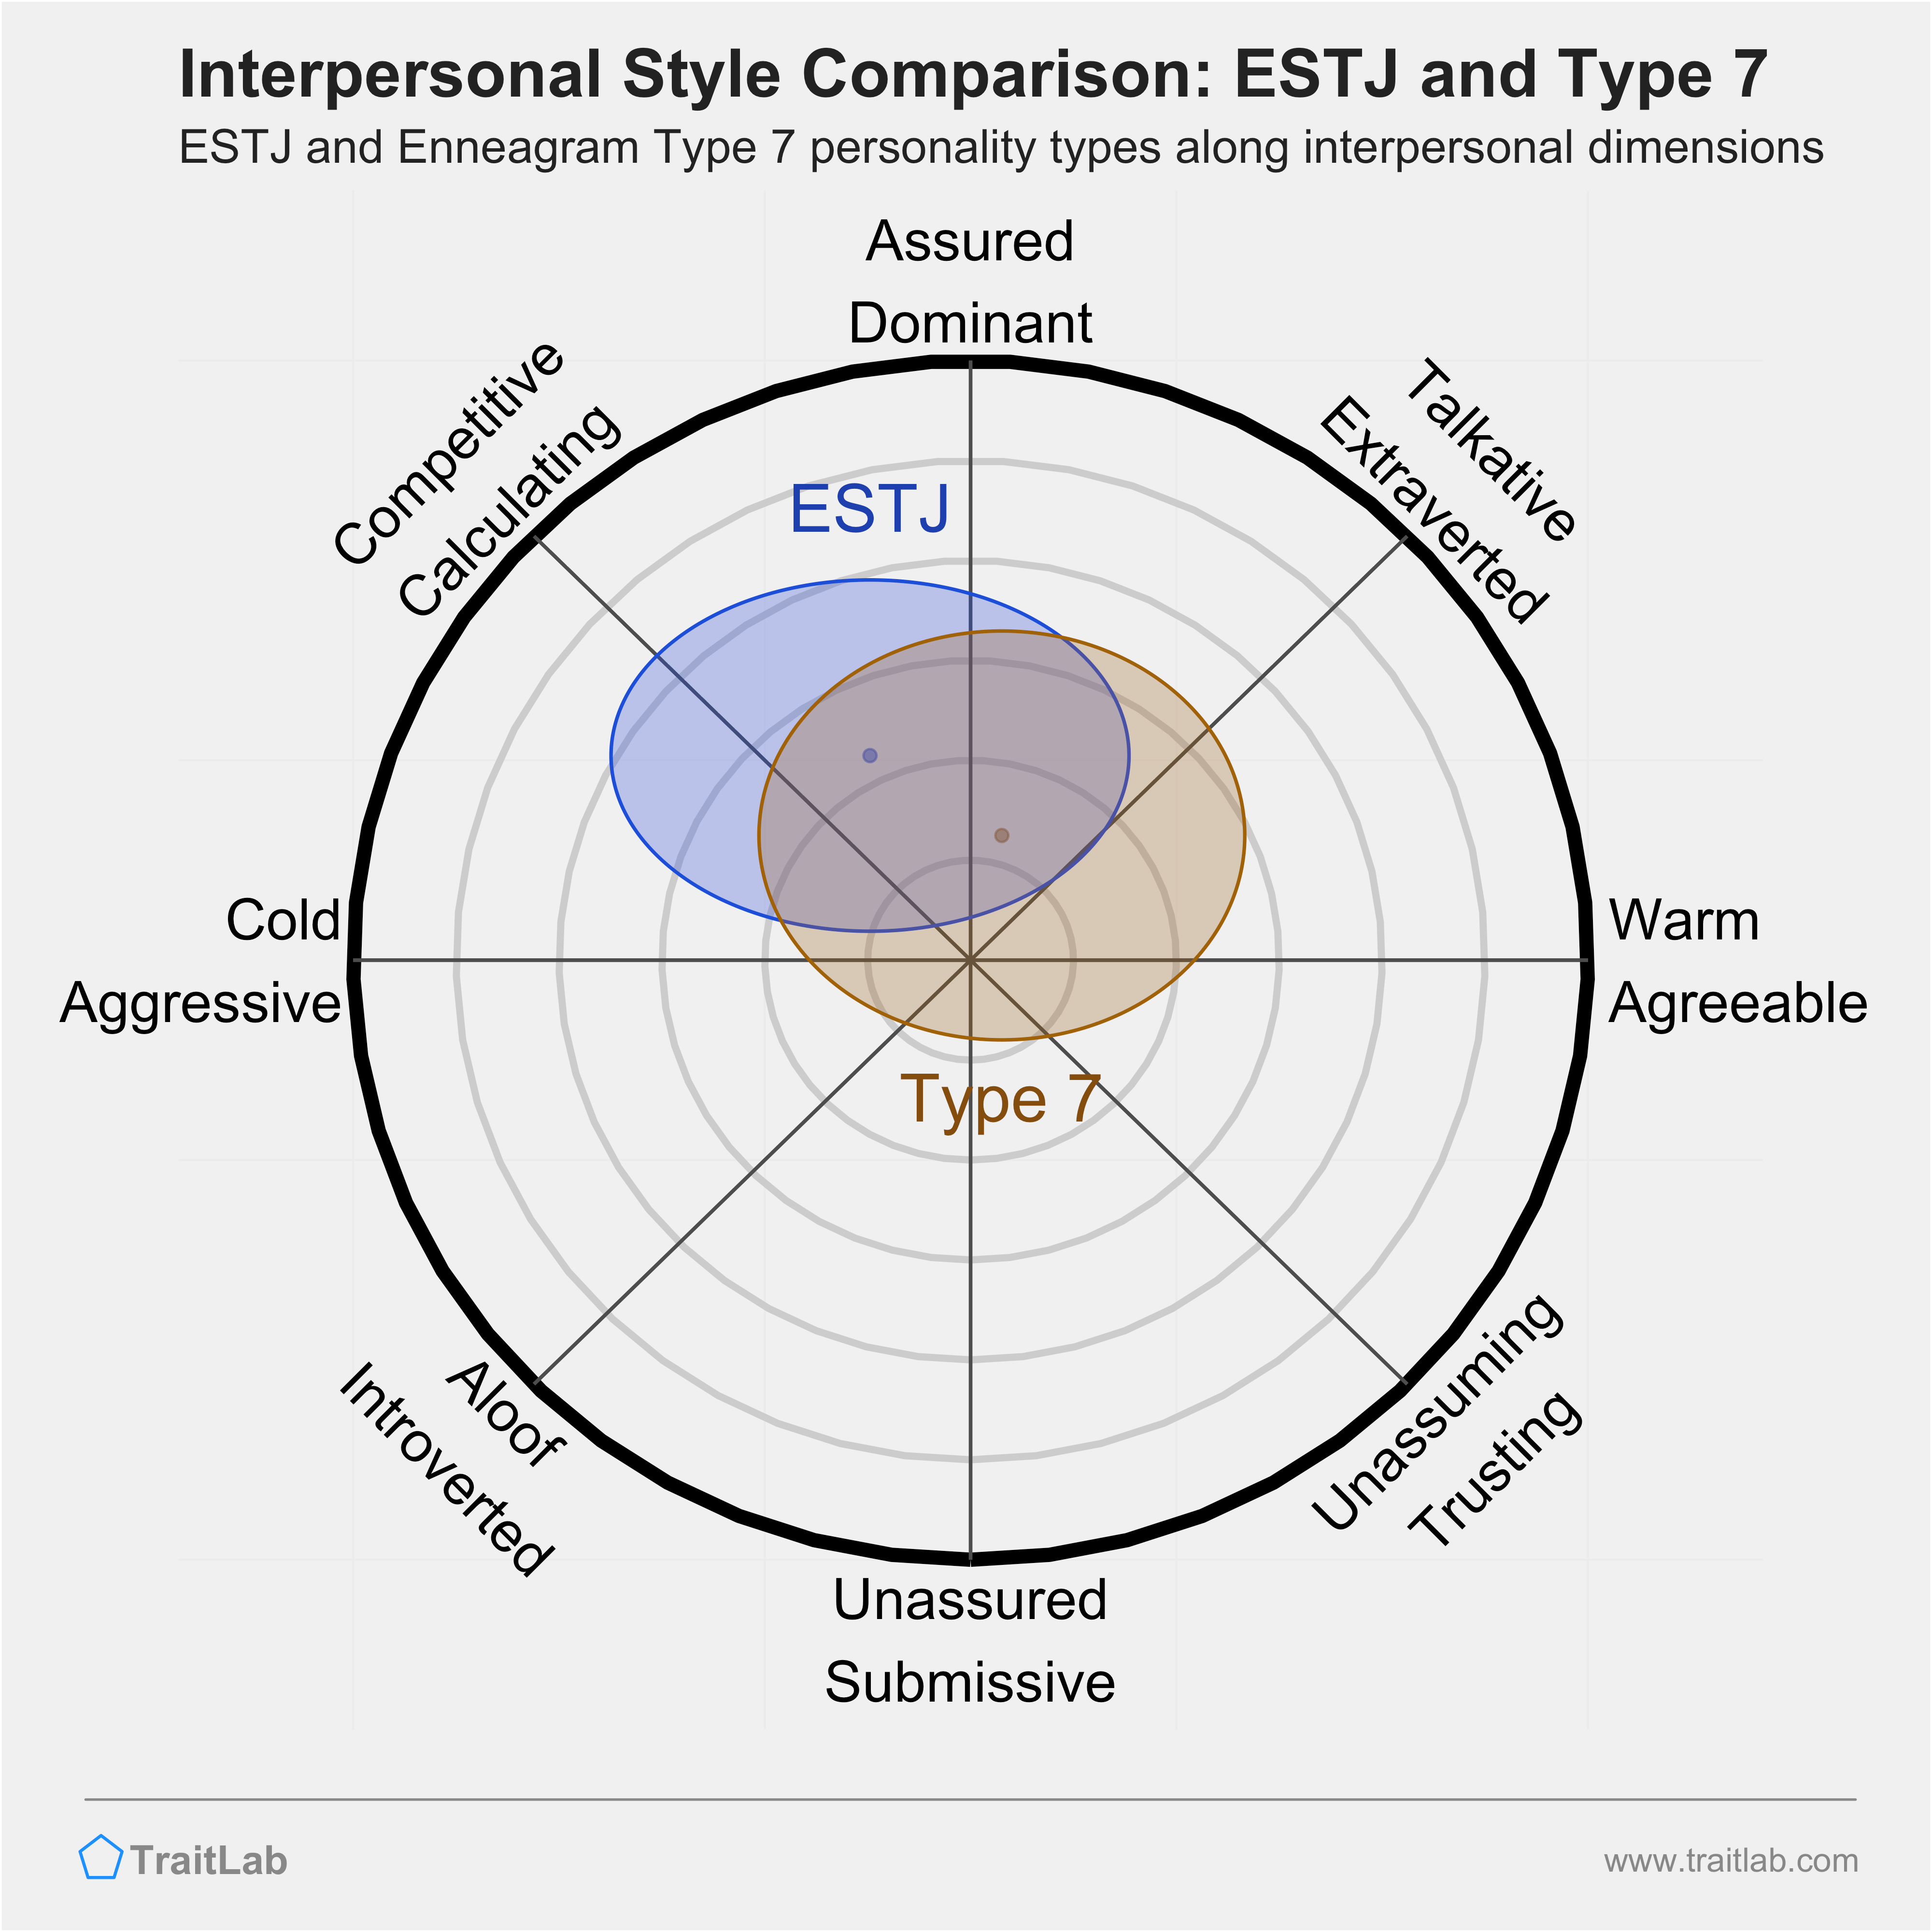 Enneagram ESTJ and Type 7 comparison across interpersonal dimensions